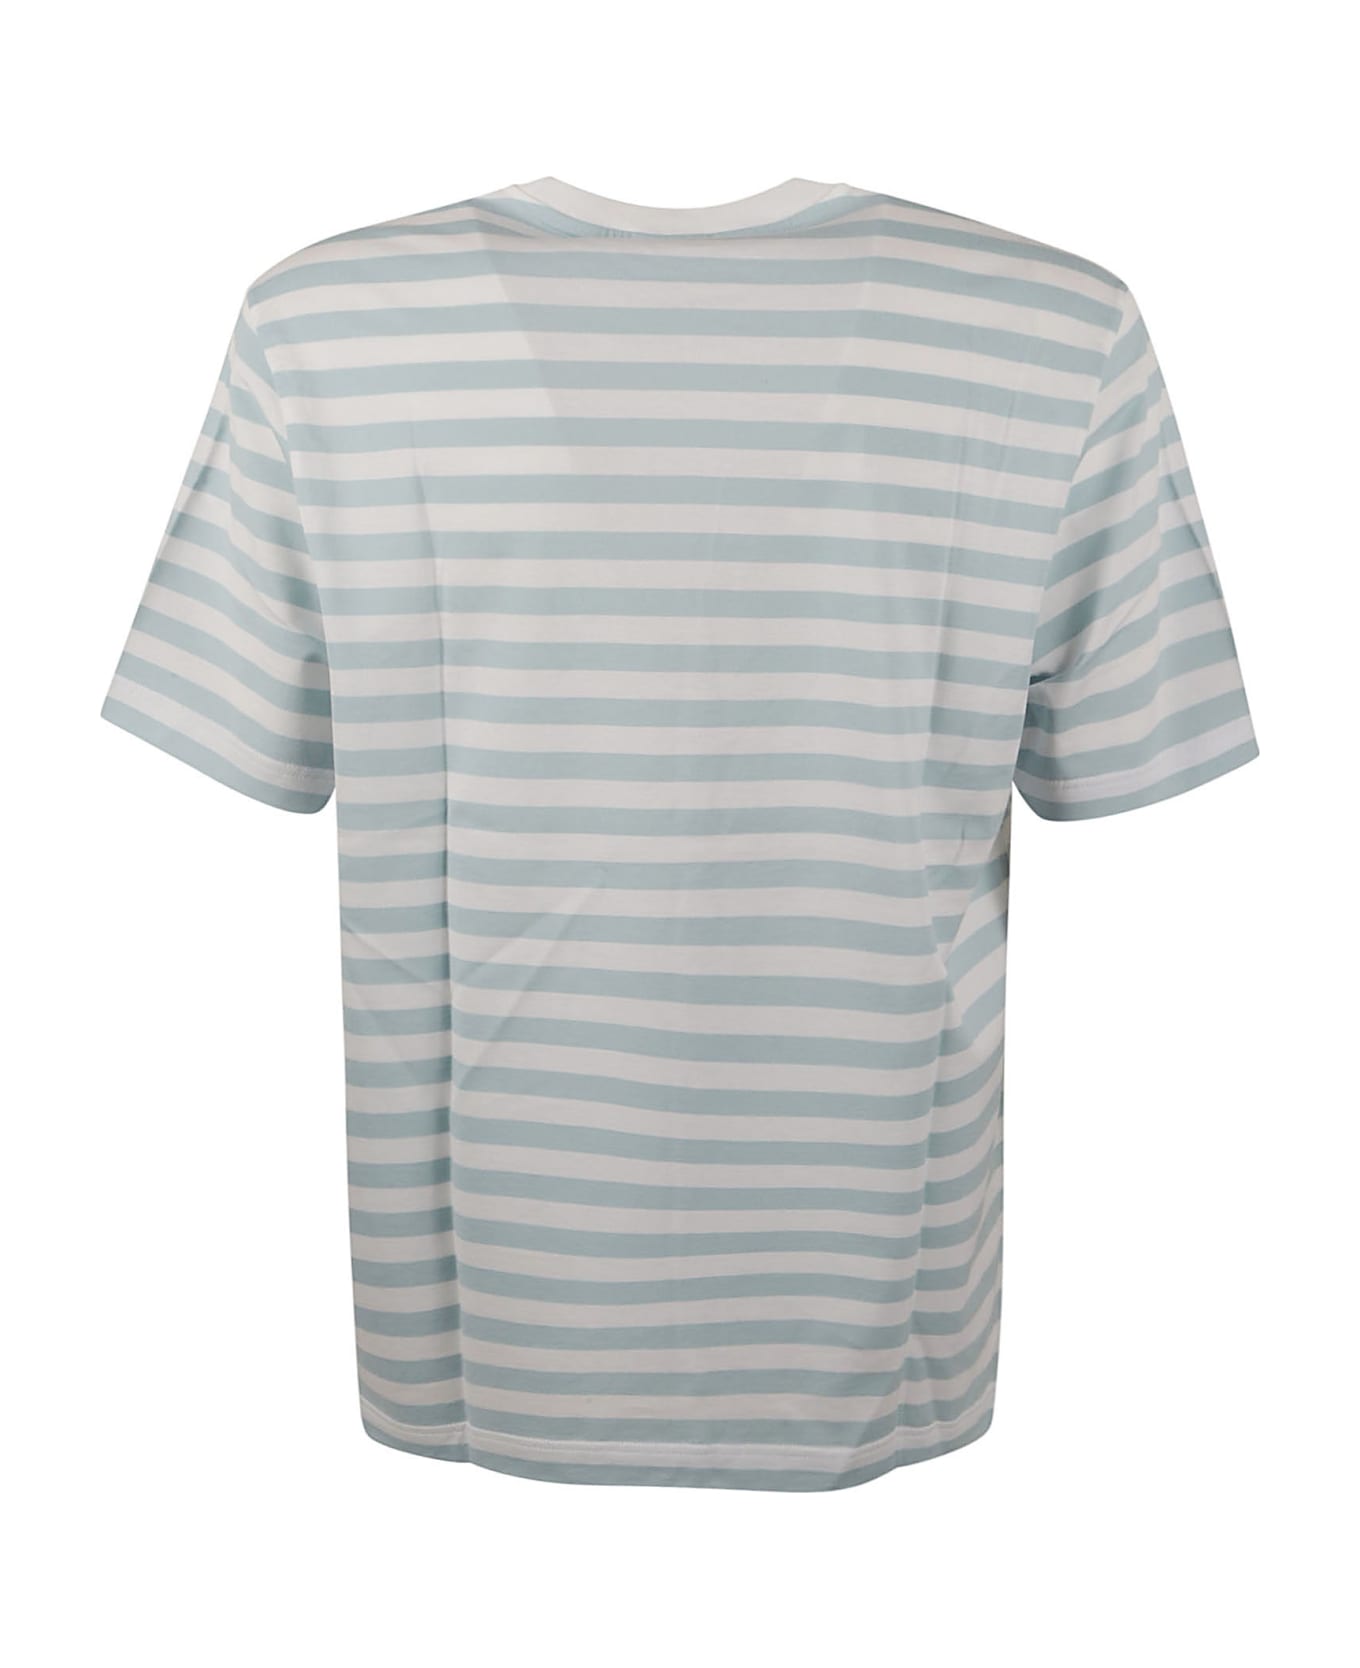 Versace Striped T-shirt - White/Pale Blue